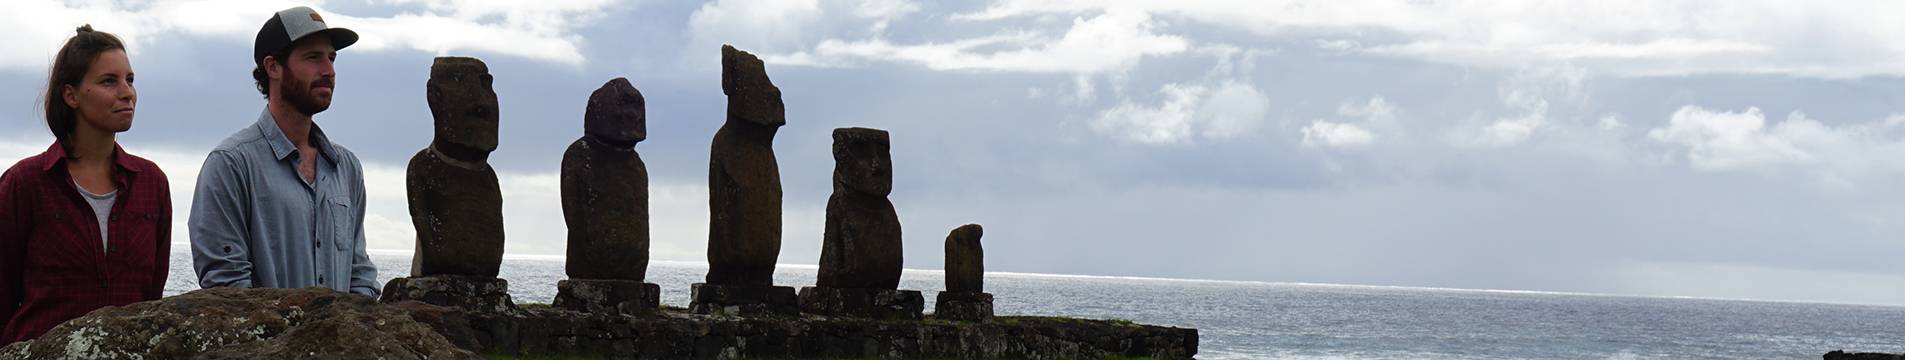 Rapa Nui - die Osterinsel - soviel mehr als "nur" Moais